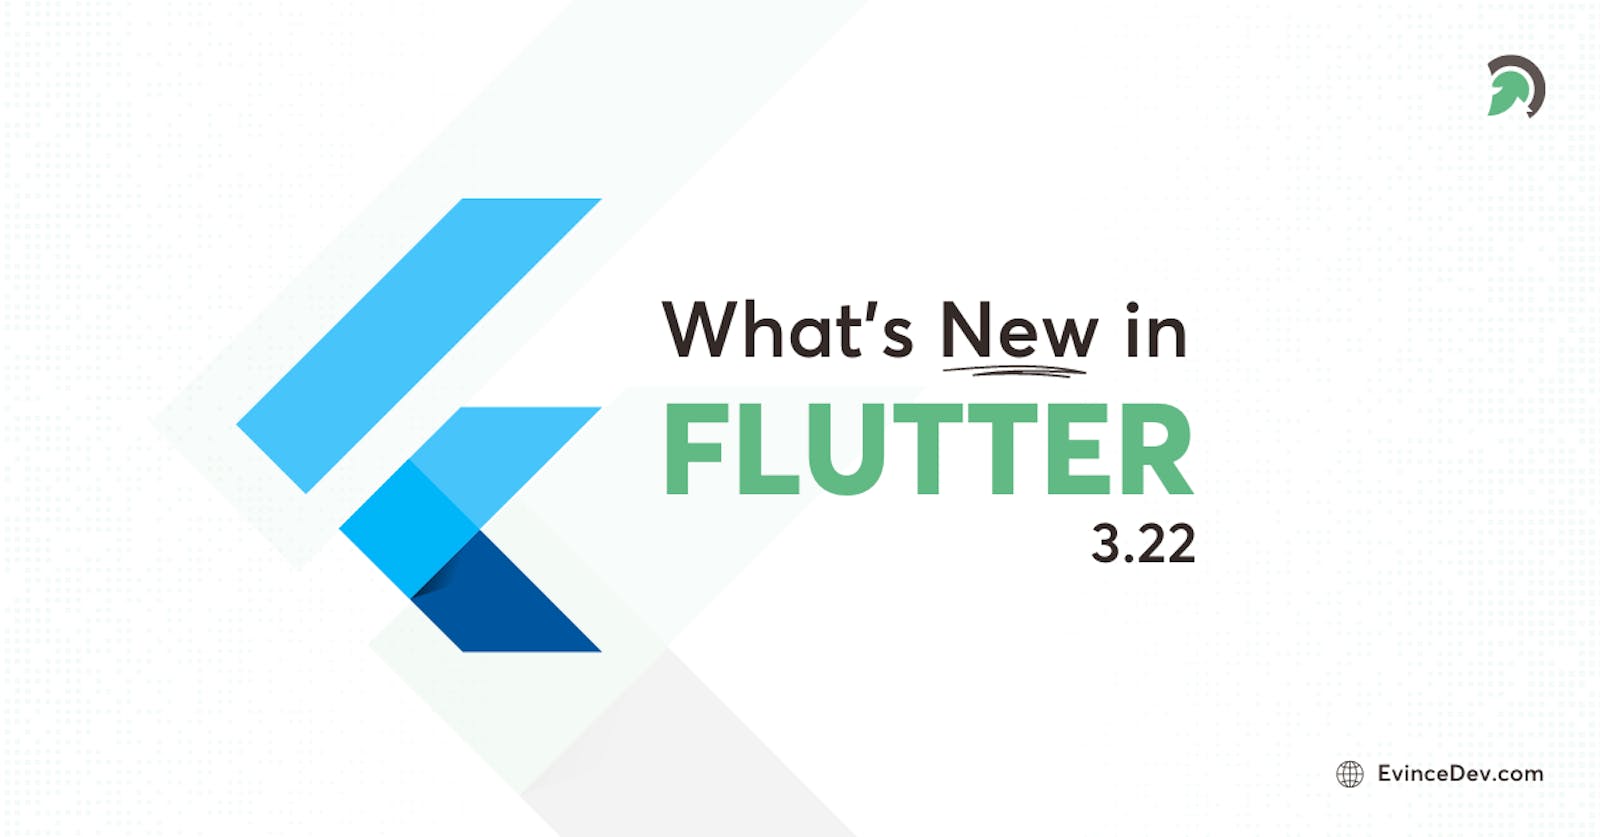 What’s New in Flutter 3.22 Release? How Will It Help in Flutter Development?